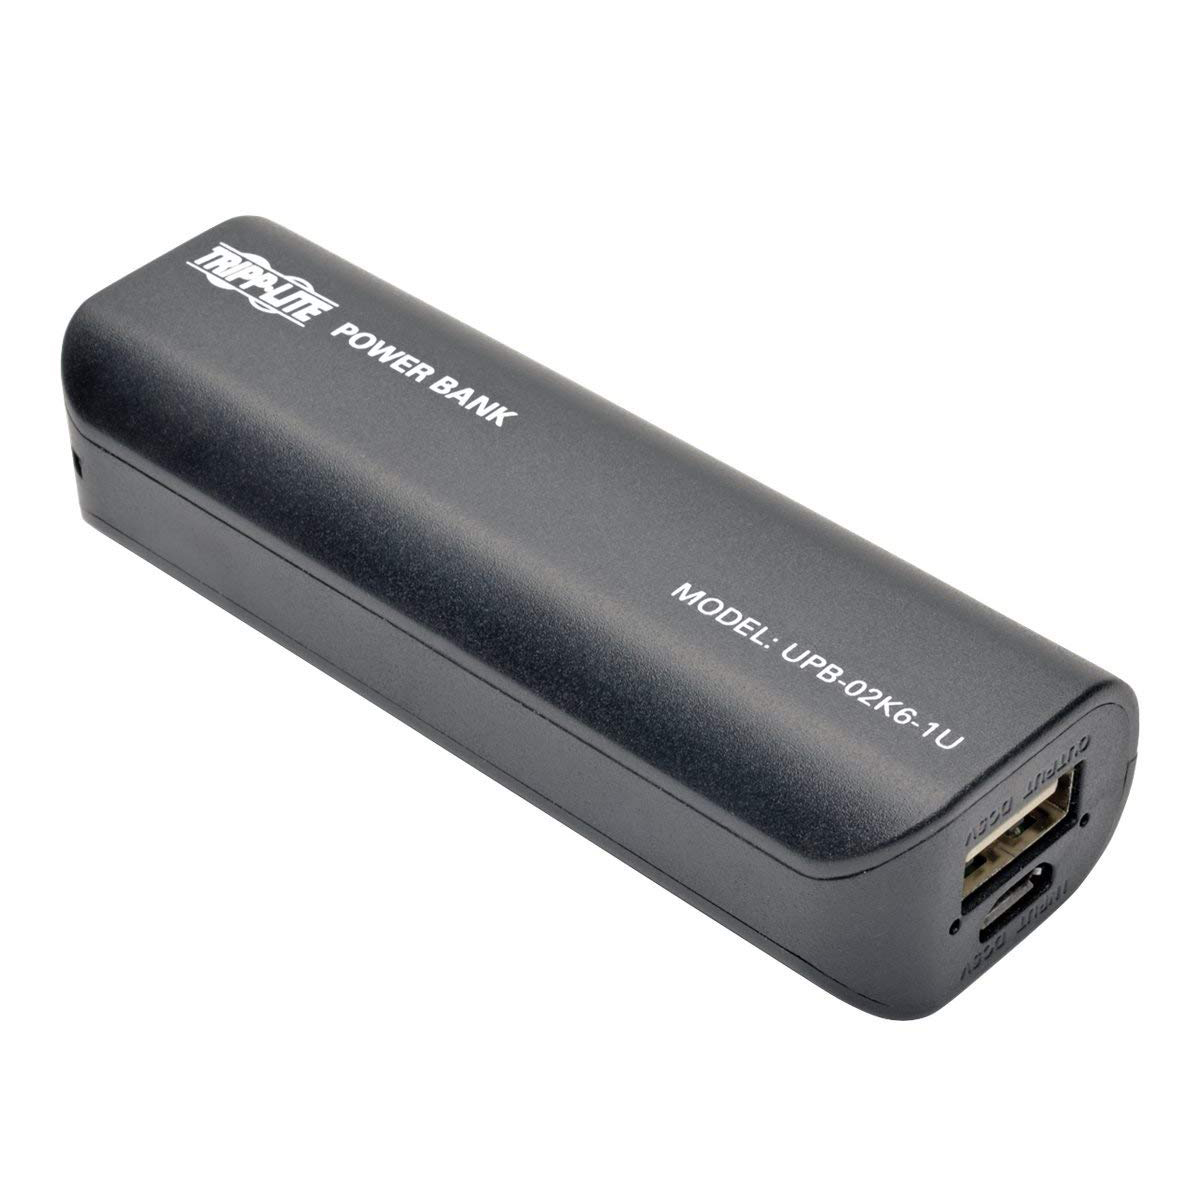 TRIPP LITE Portable 2600mAh Mobile Power Bank USB Battery Charger